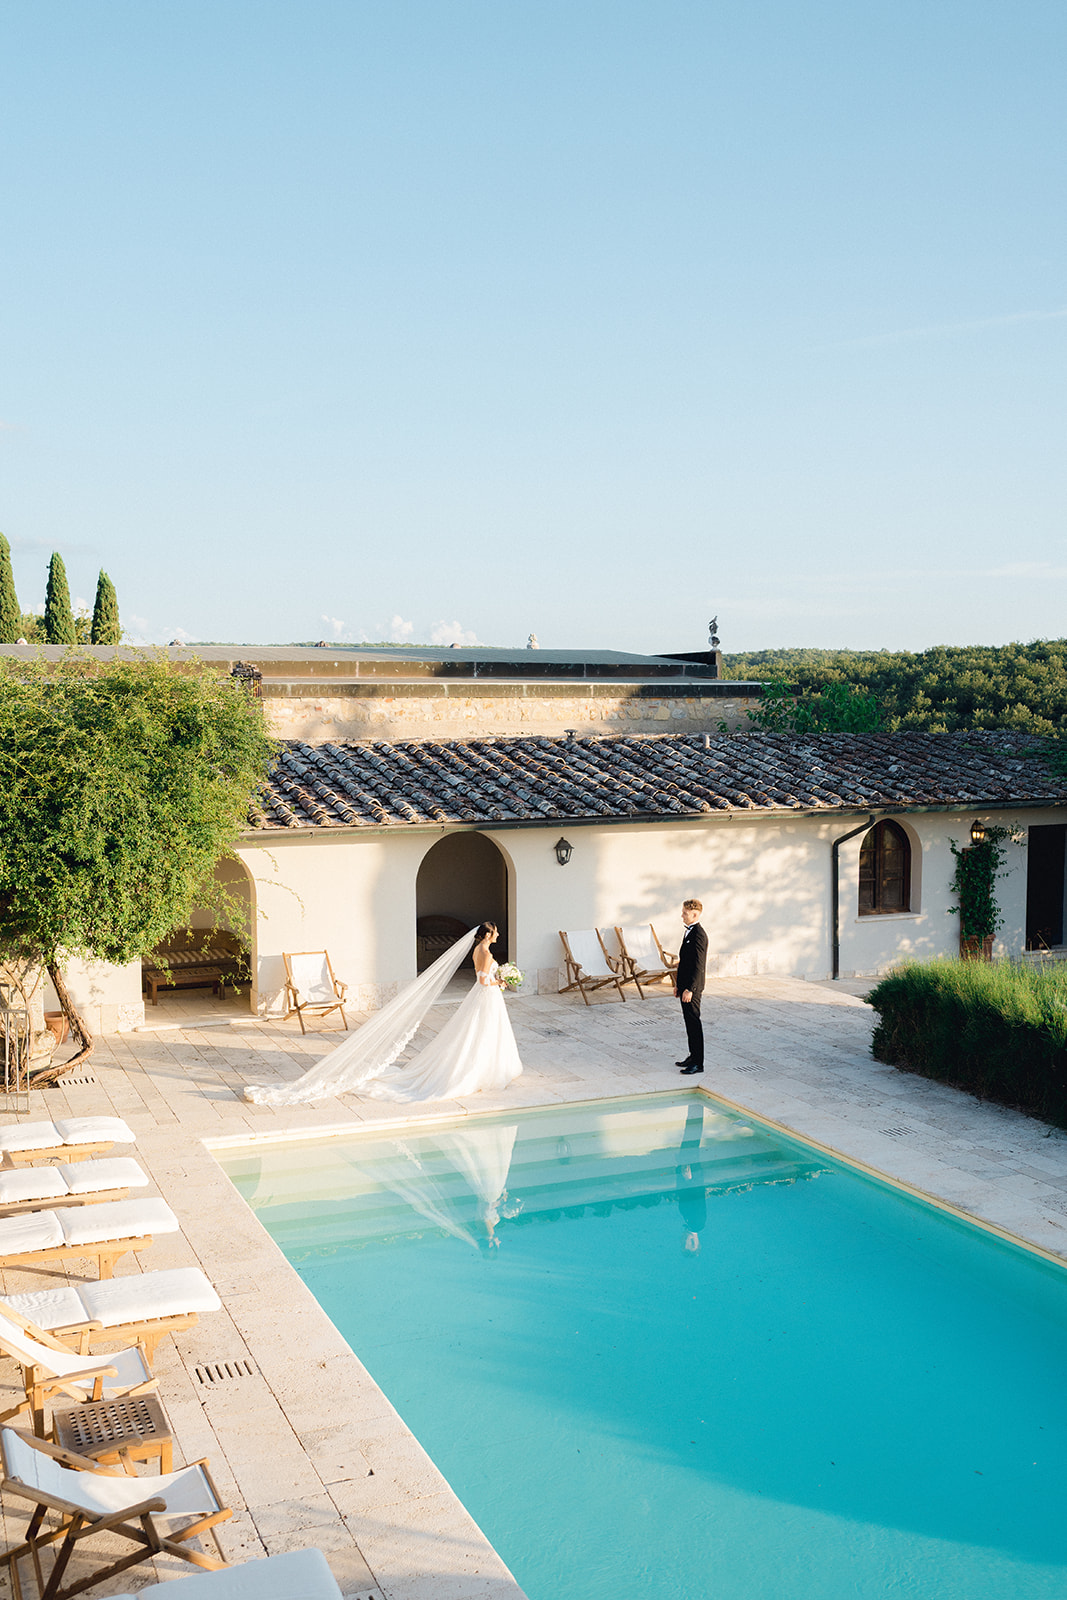 The newlyweds walk near the edge of the pool at Villa La Selva in Arezzo